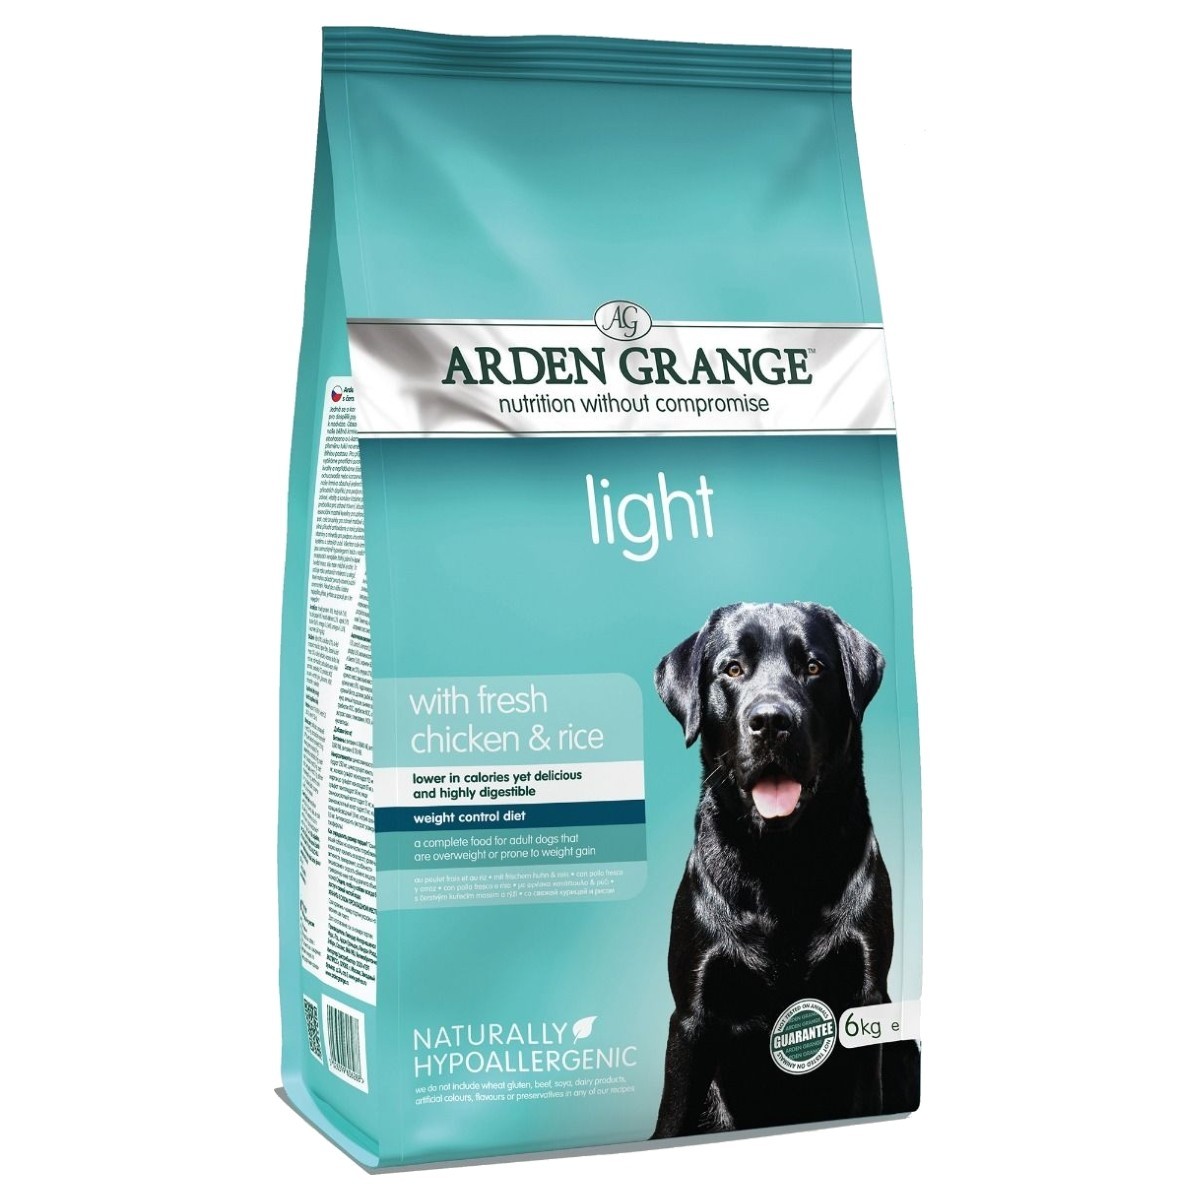 Сухой корм для собак best. Корм для собак Арден Грендж. Корм Arden Grange. Senior&Light sensitive (Arden Grange для чувствительных пожилых собак). Arden Grange sensitive для собак.